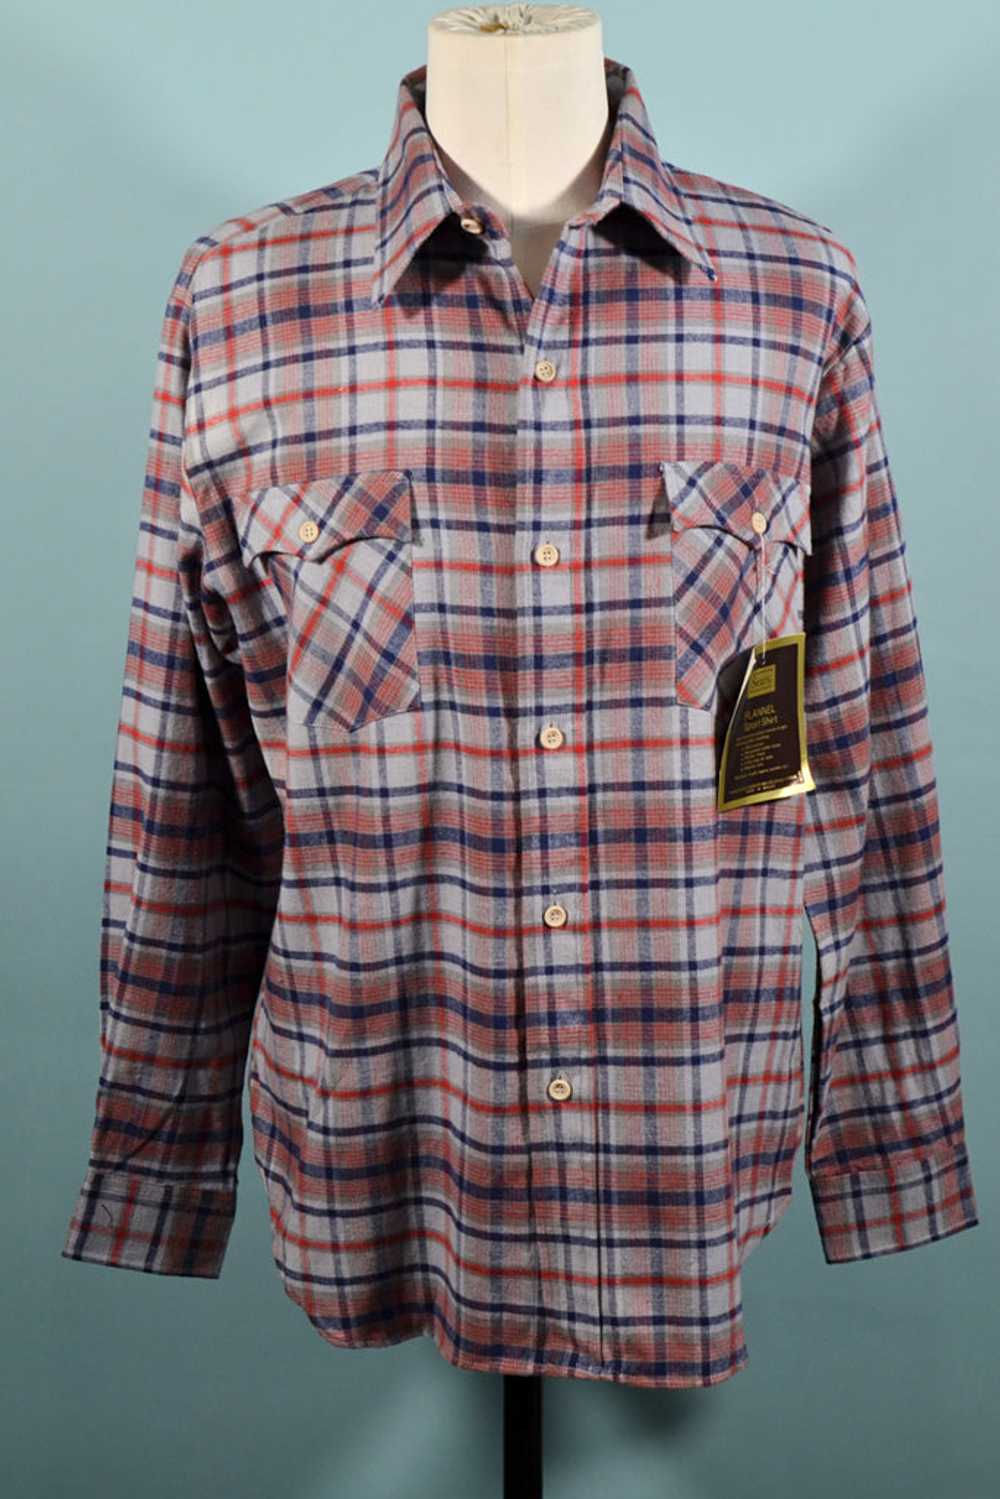 Vintage 70s/80s Plaid Shirt, Unworn Original Tags… - image 1